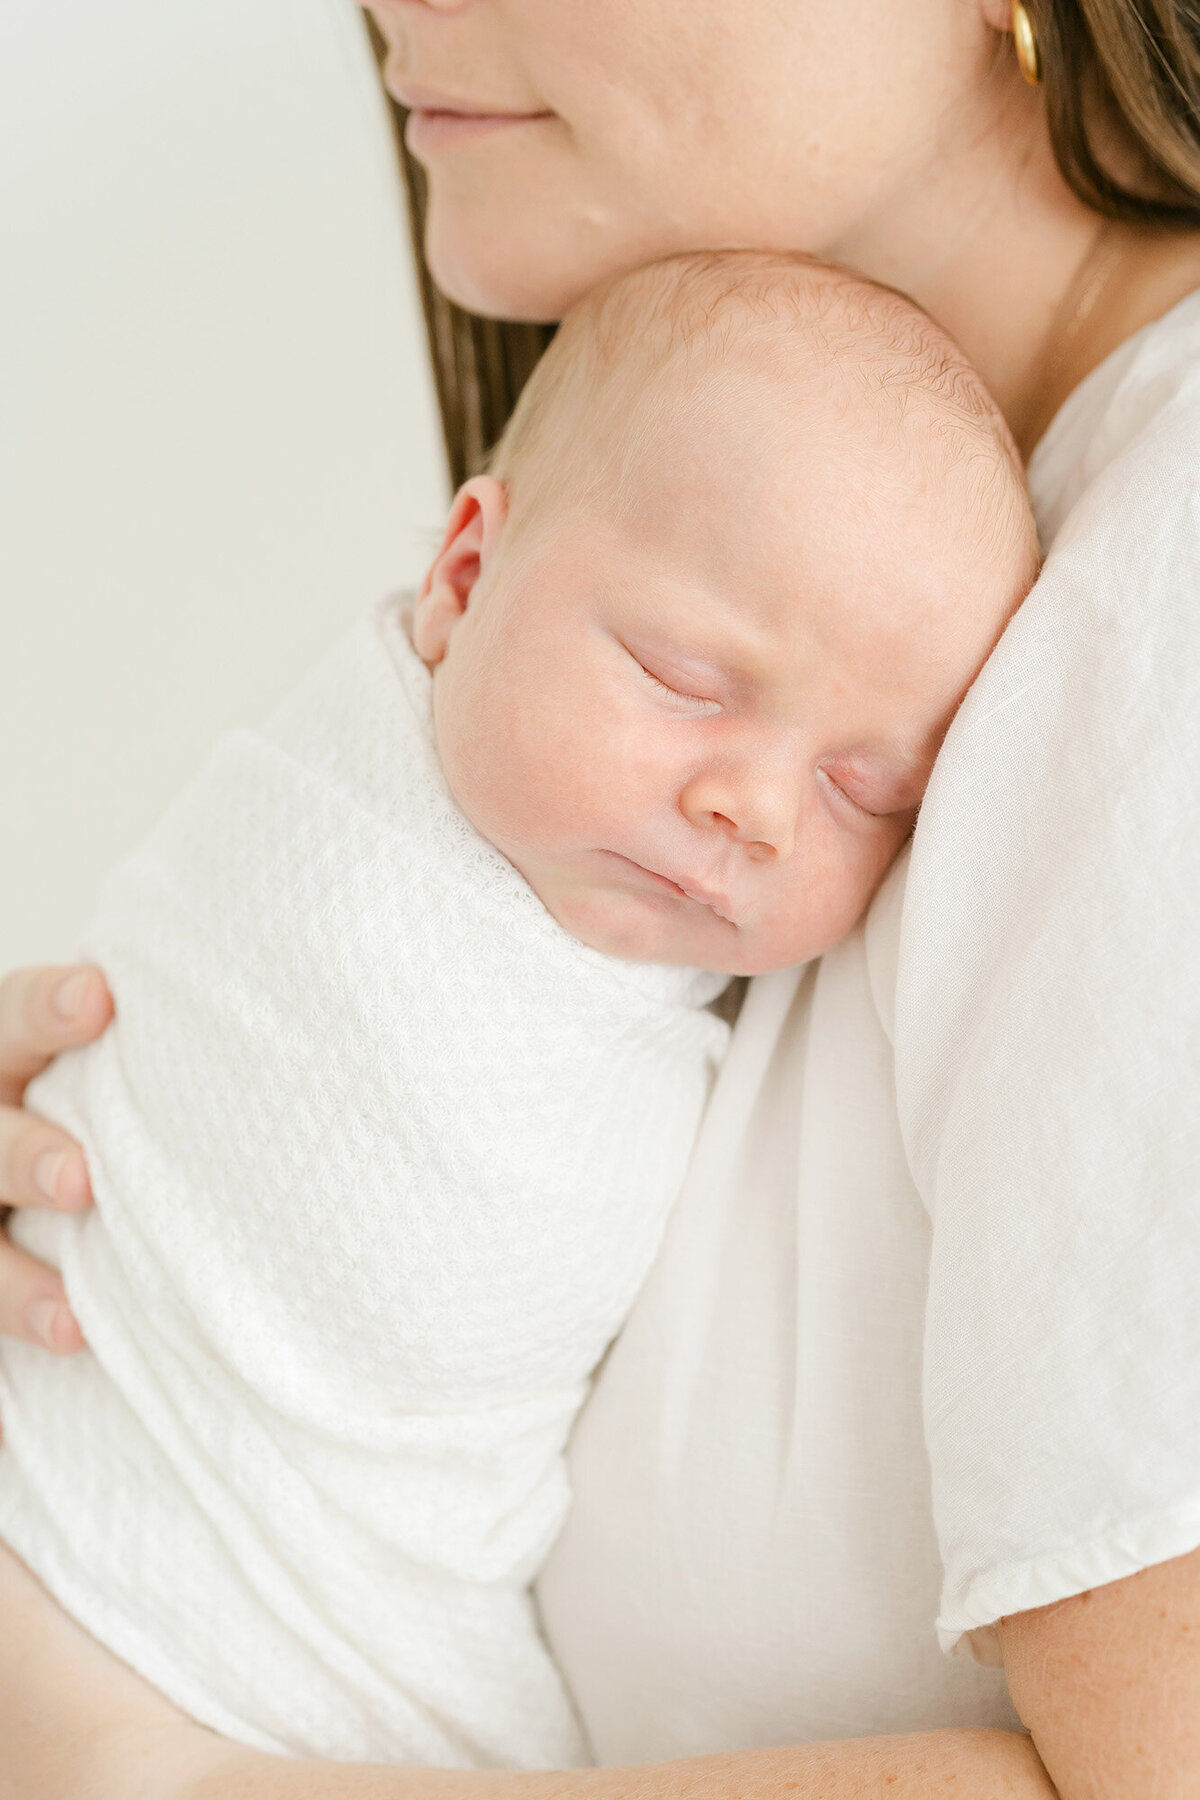 newborn baby girl sleeps on mother's shoulder during newborn photo shoot in Kentucky with Julie Brock